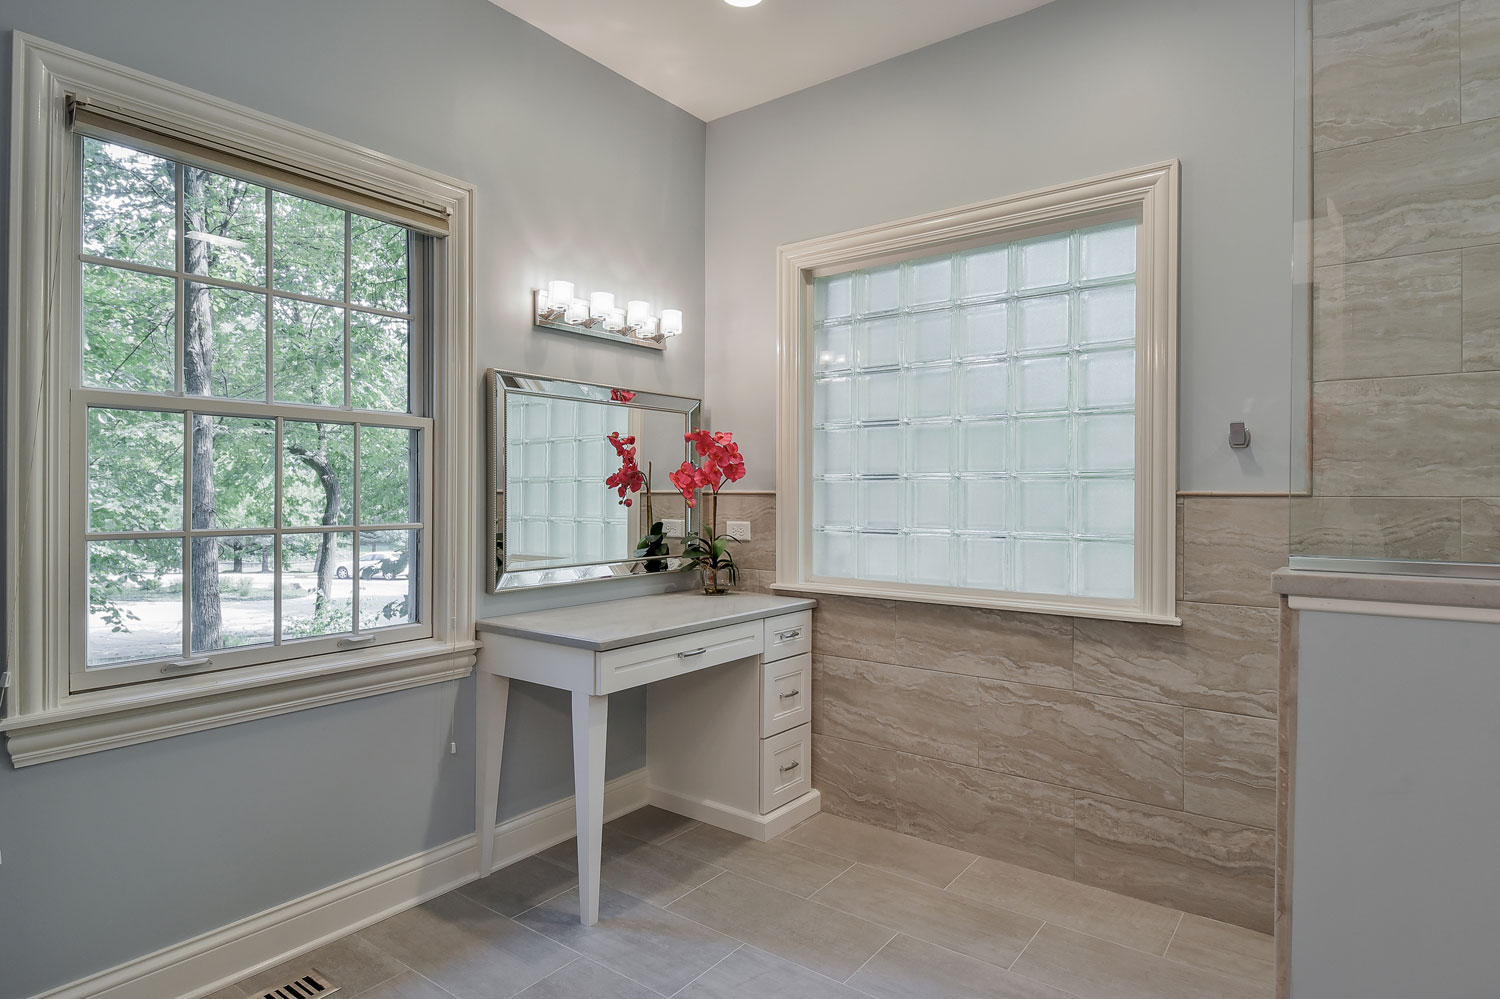 Naperville bathroom curbless modern - Sebring Design Build